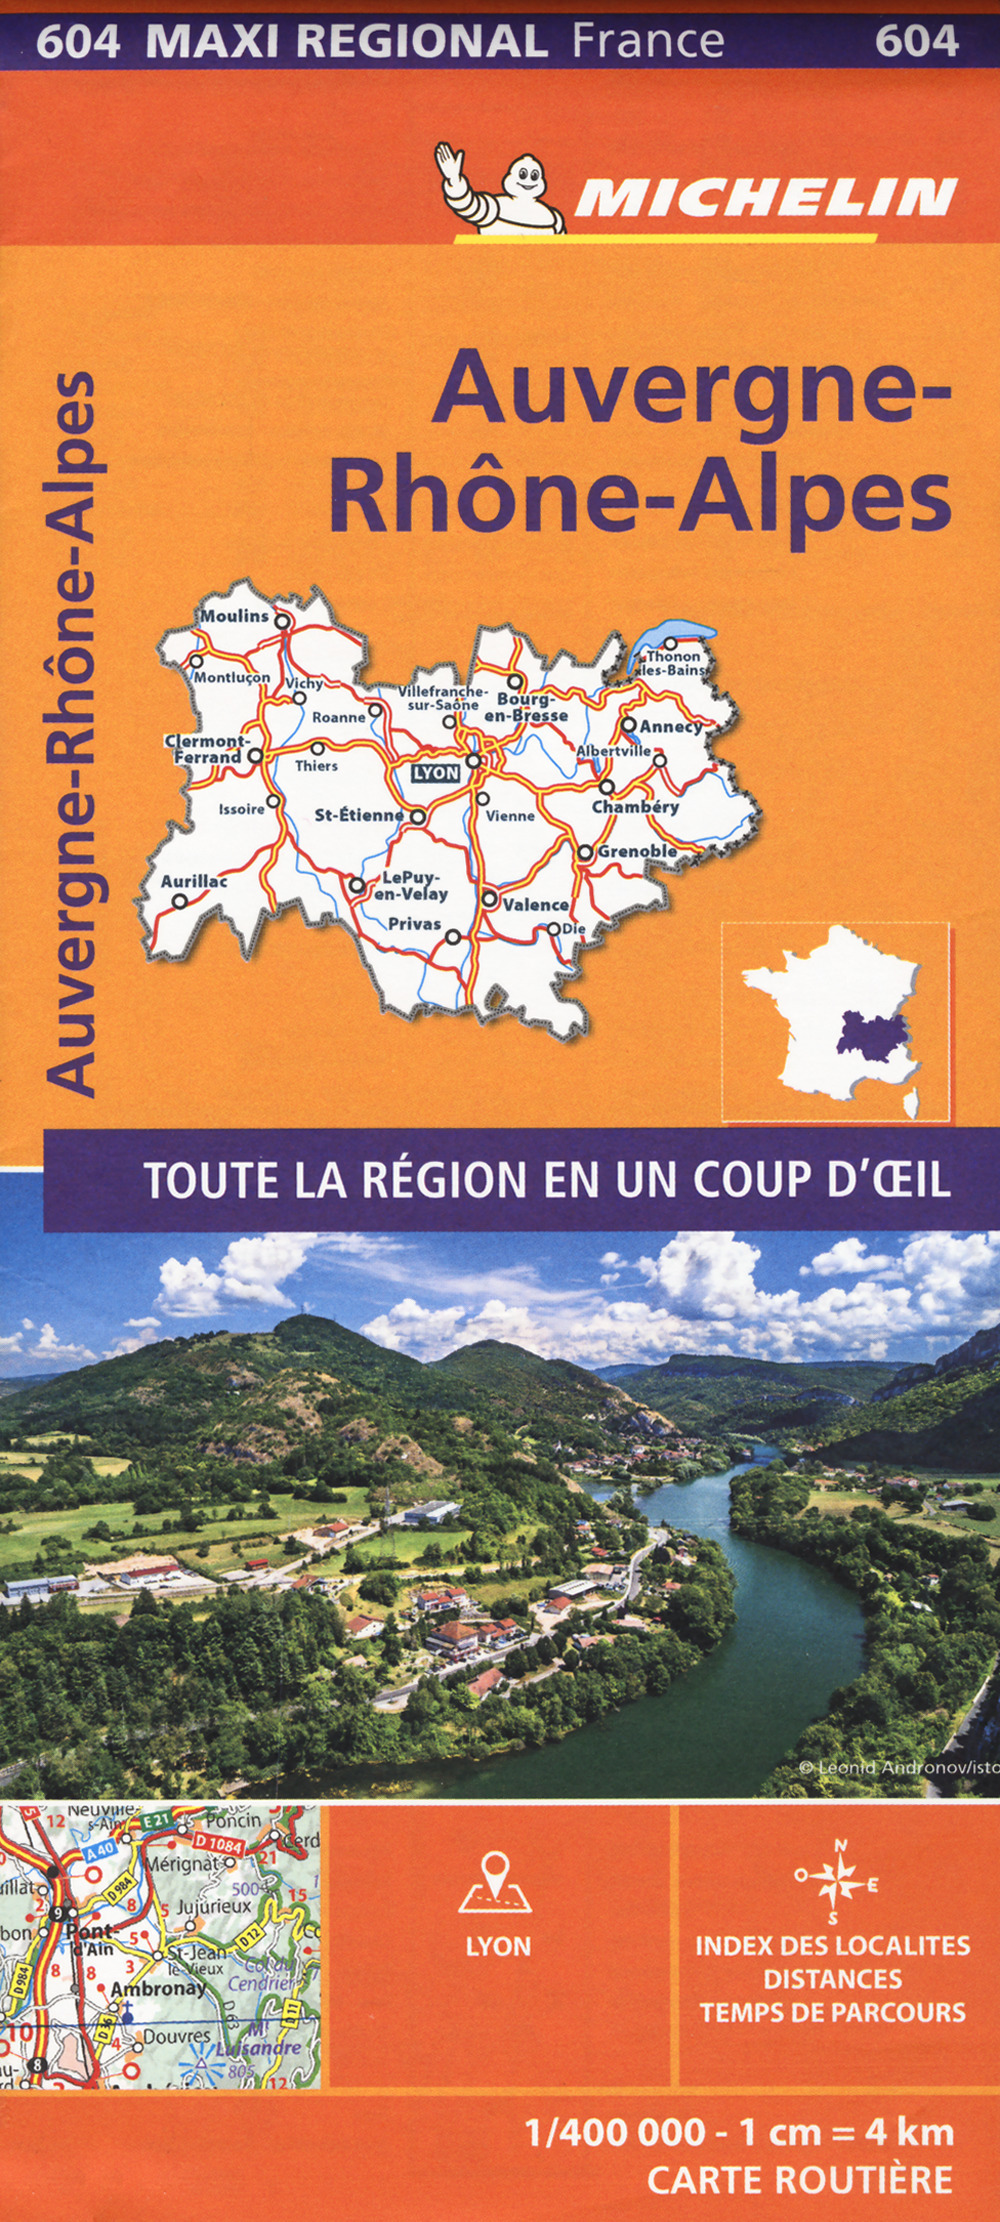 Auvergne-Rhône-Alpes 1:400.000